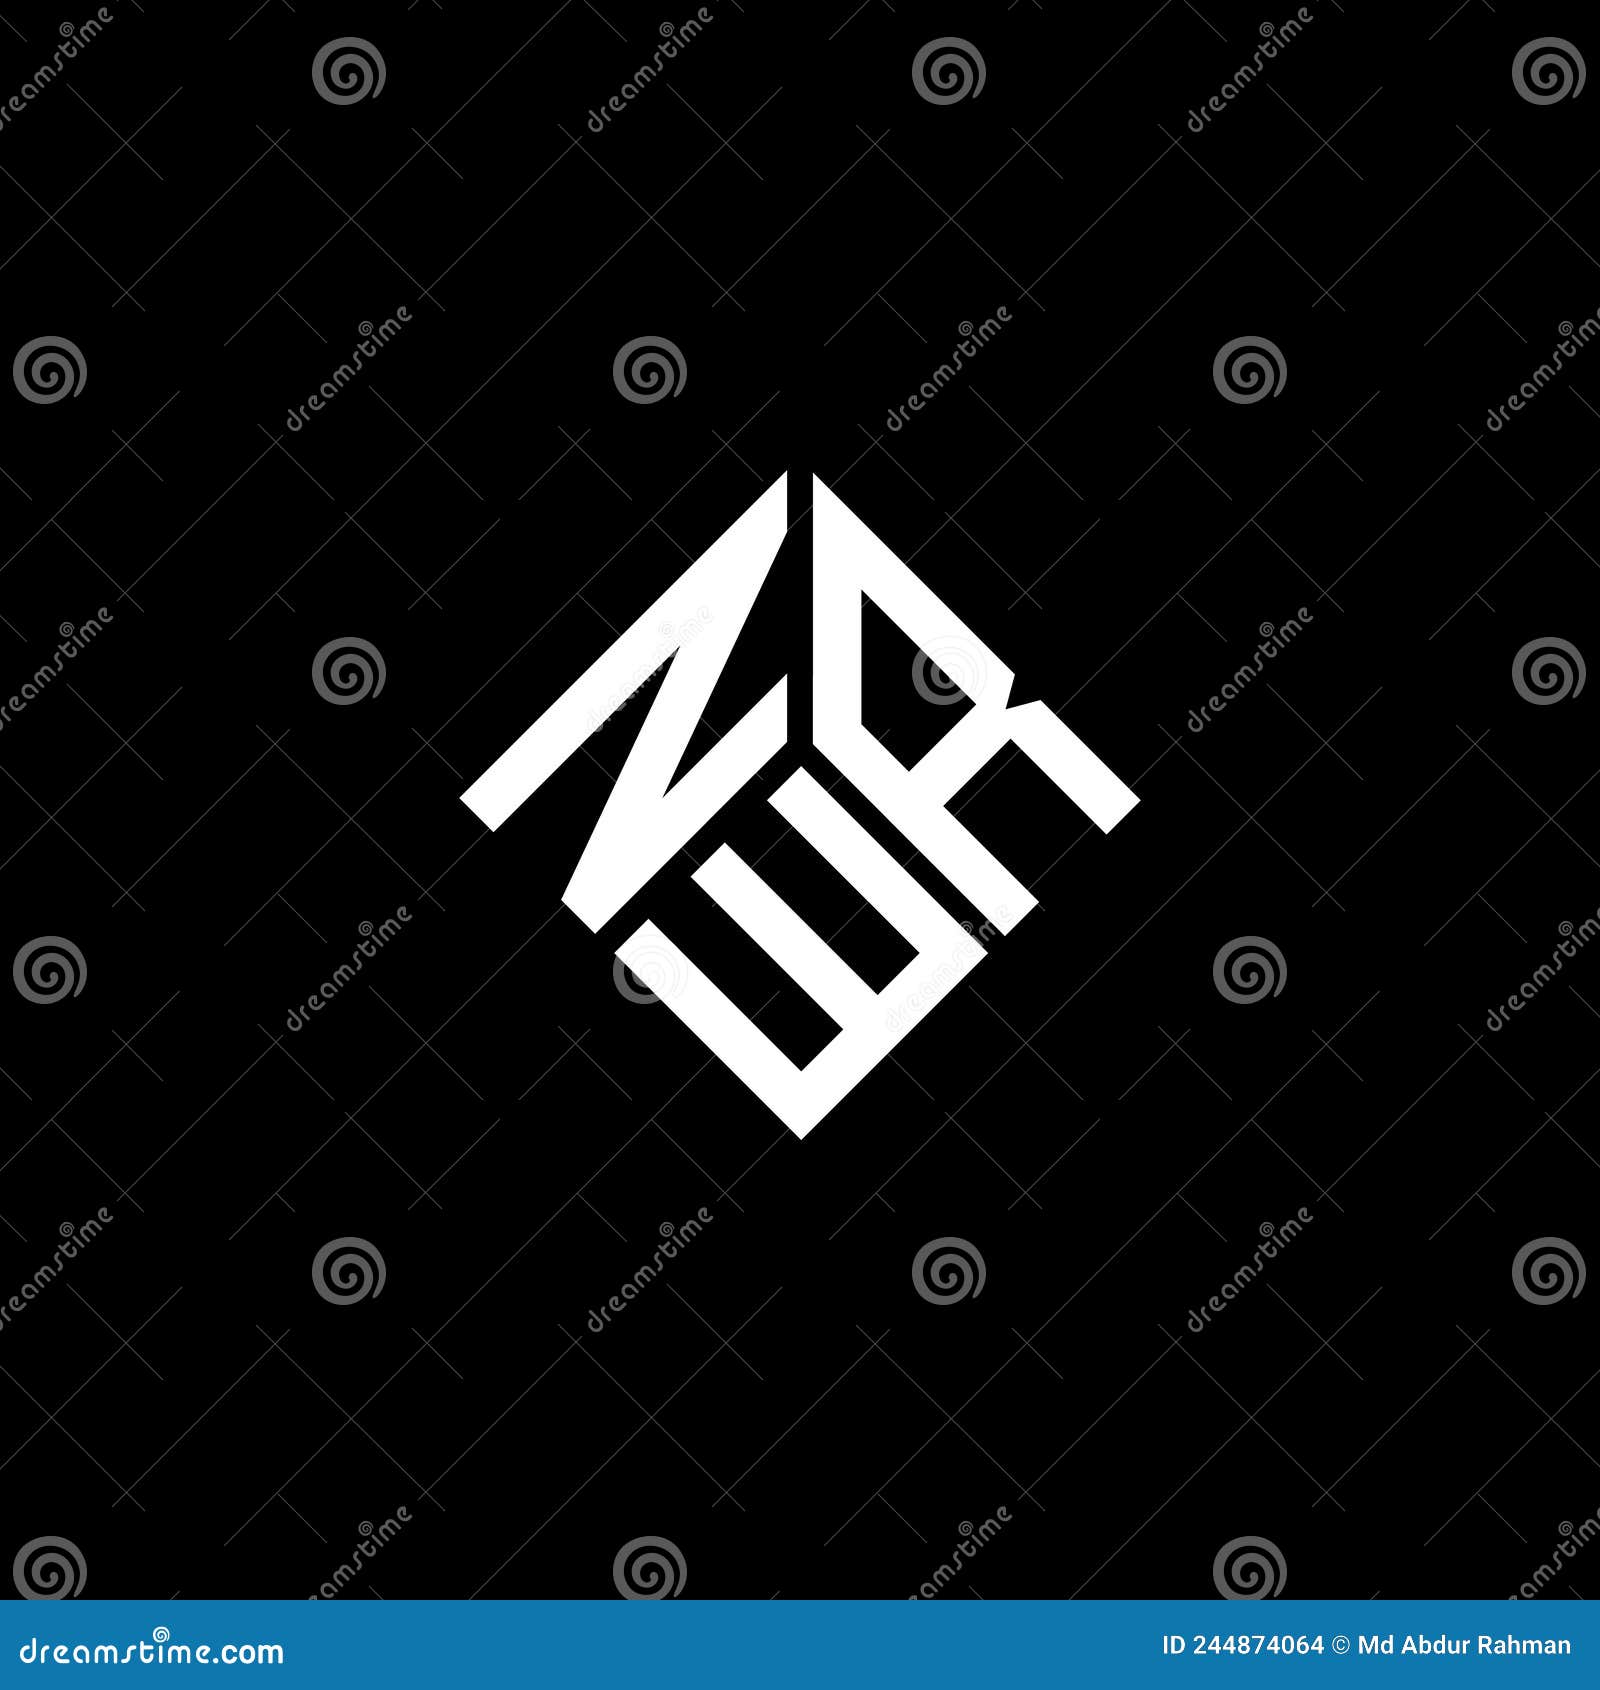 nwr letter logo  on black background. nwr creative initials letter logo concept. nwr letter 